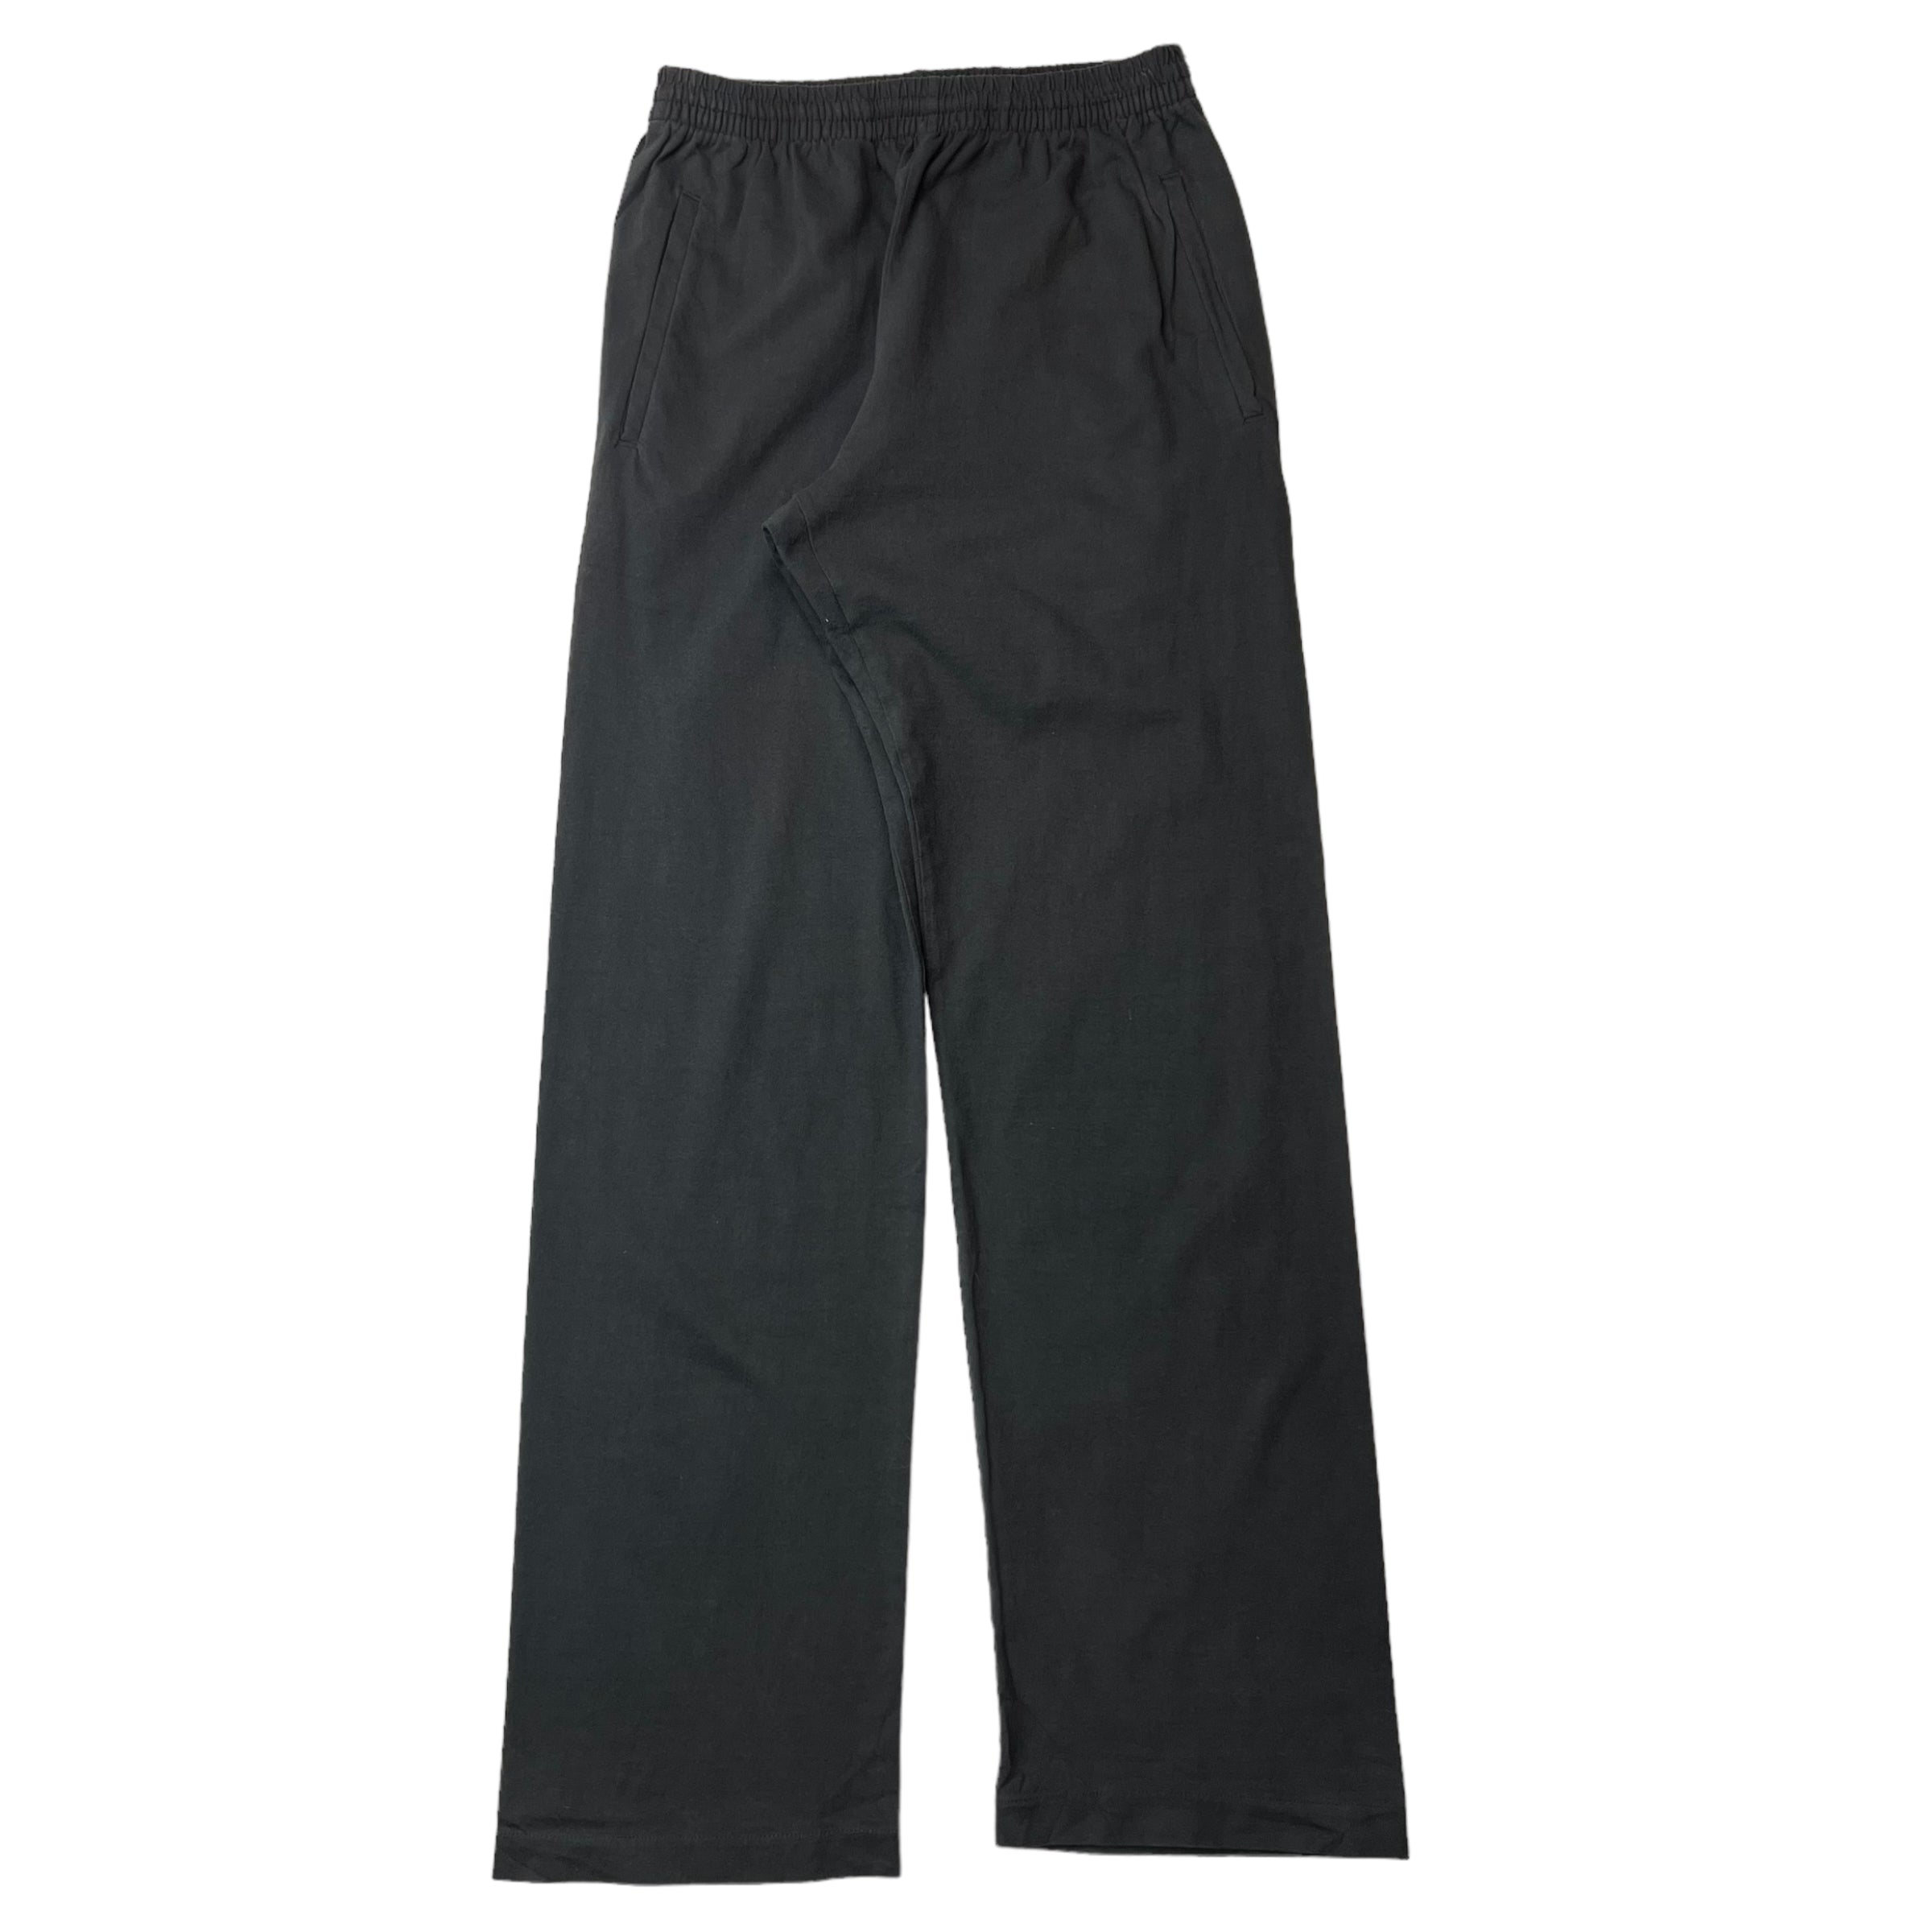 Yeezy x Gap Black Unreleased Cotton Trouser - Black Pants